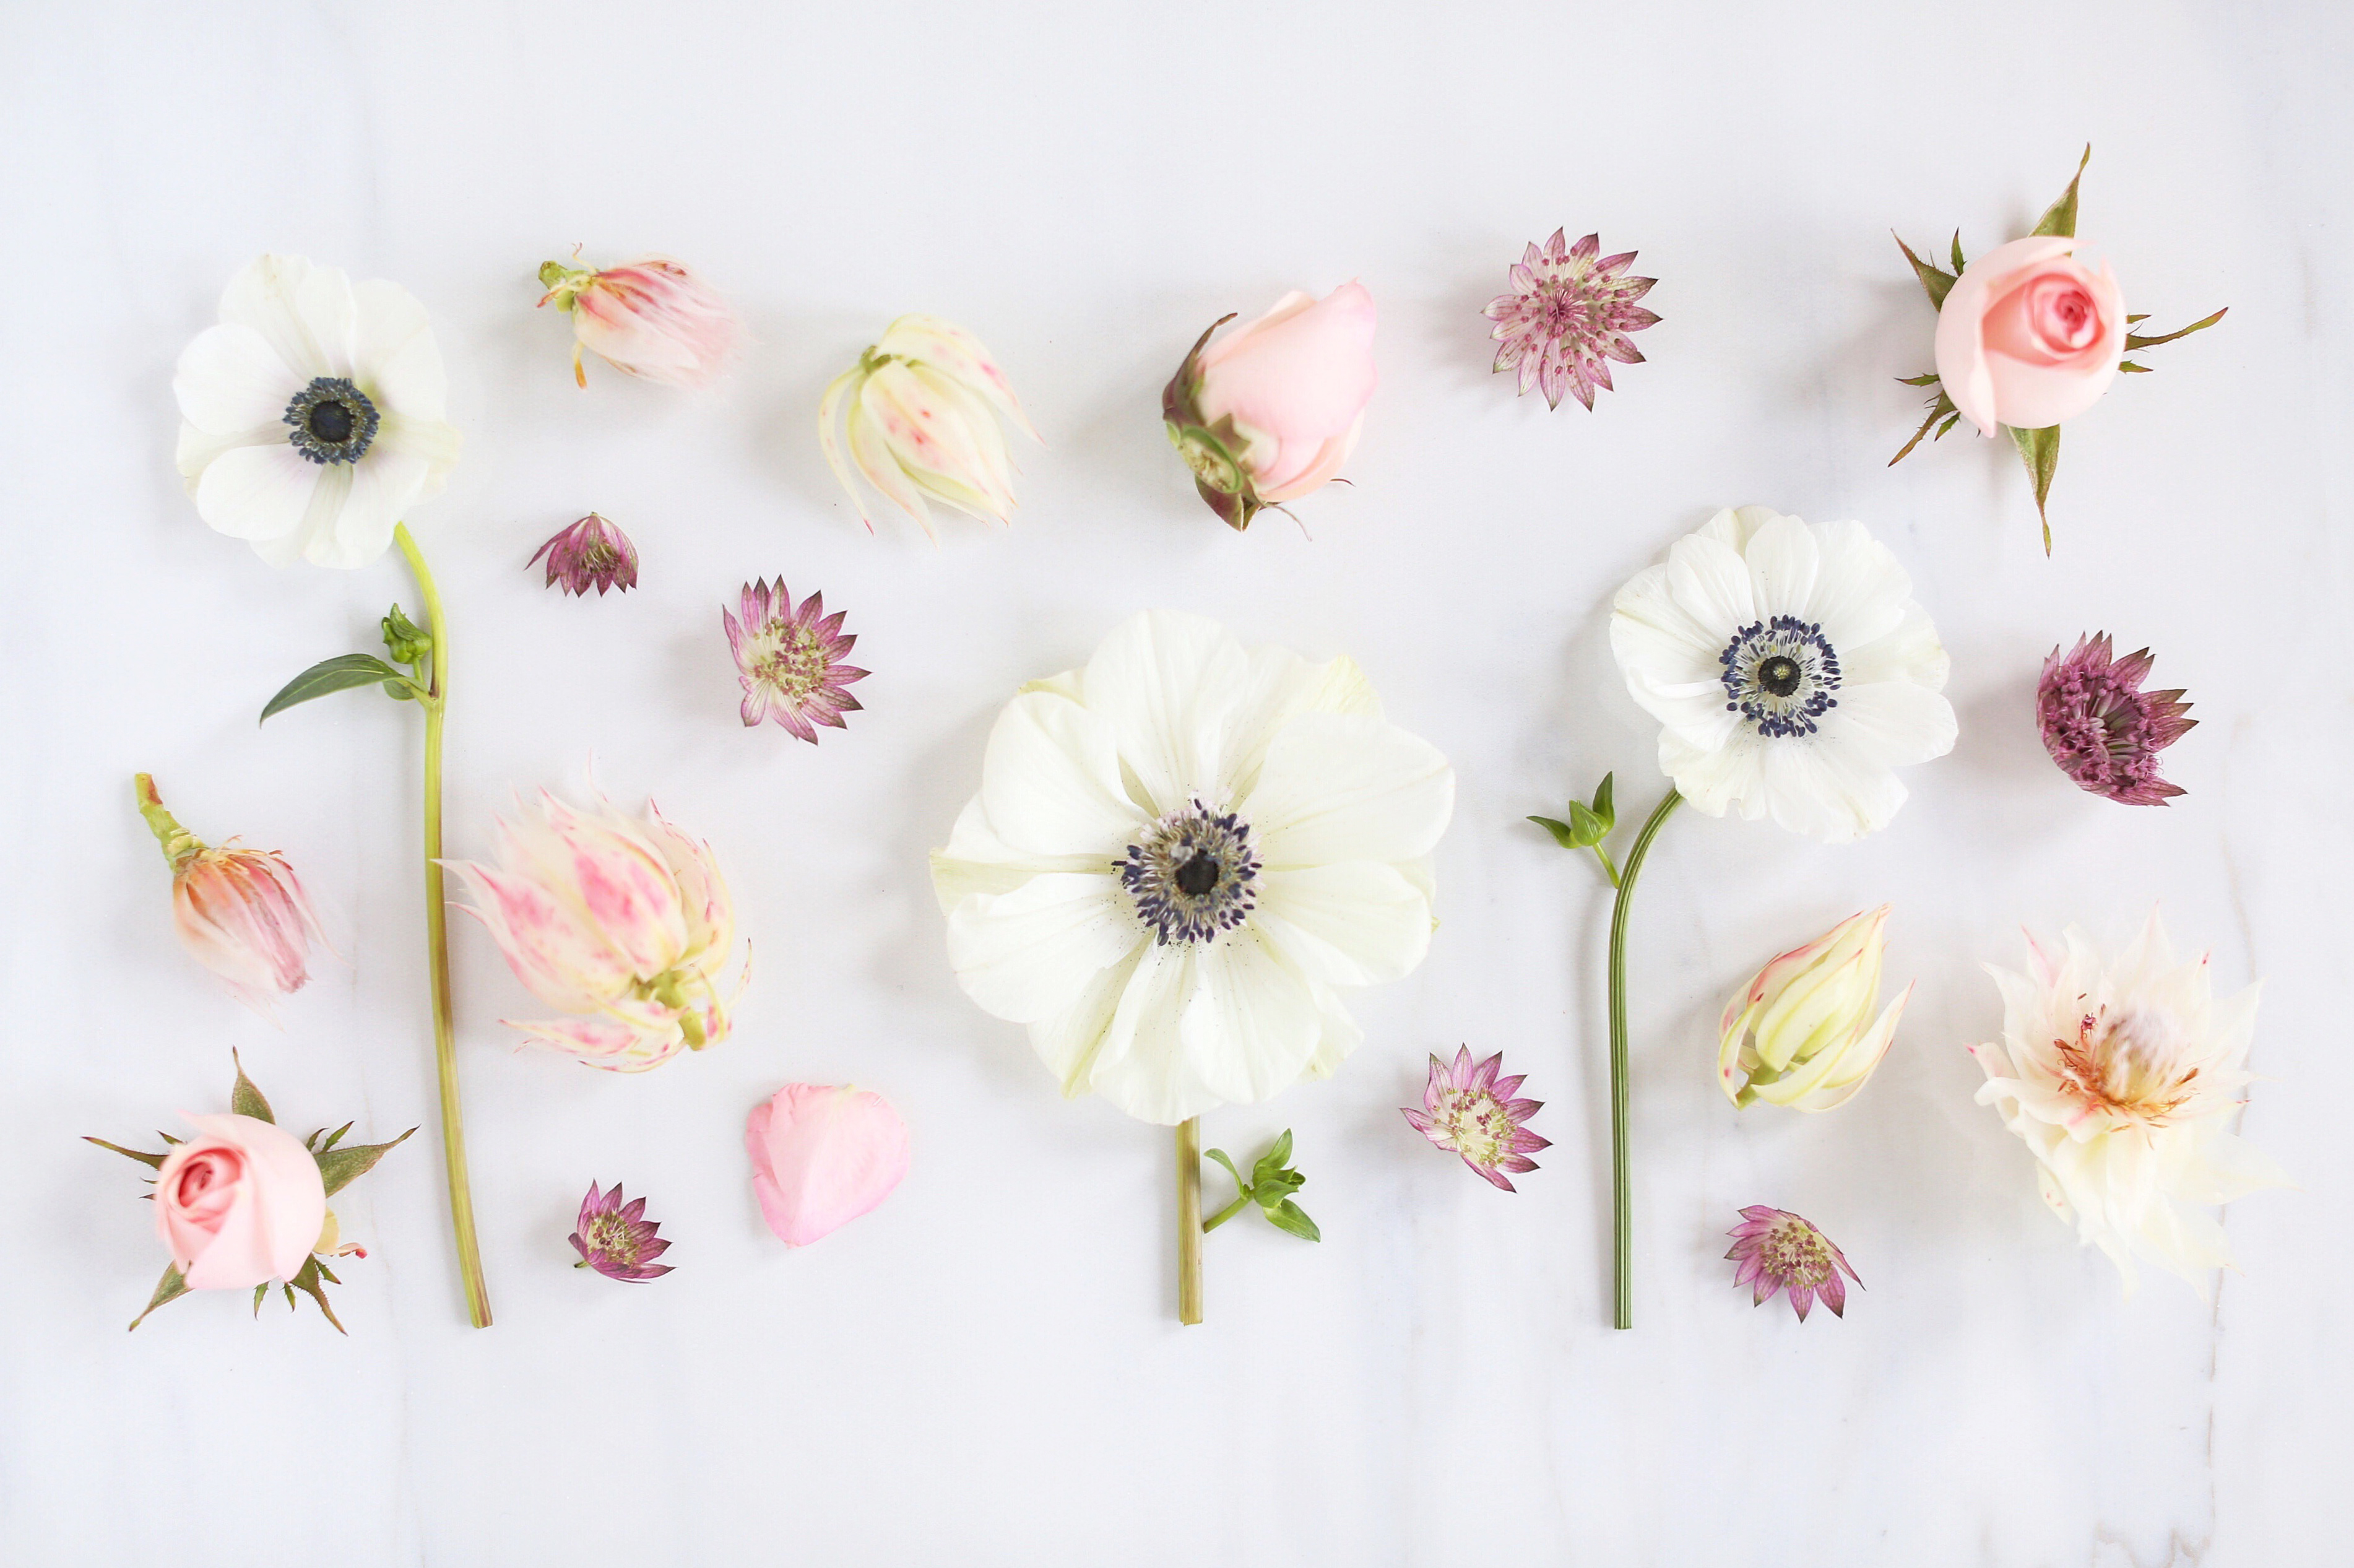 DIGITAL BLOOMS FEBRUARY 2018 | Free Blush Floral Desktop Wallpapers for Valentine’s Day | Design 3 // JustineCelina.com x Rebecca Dawn Design